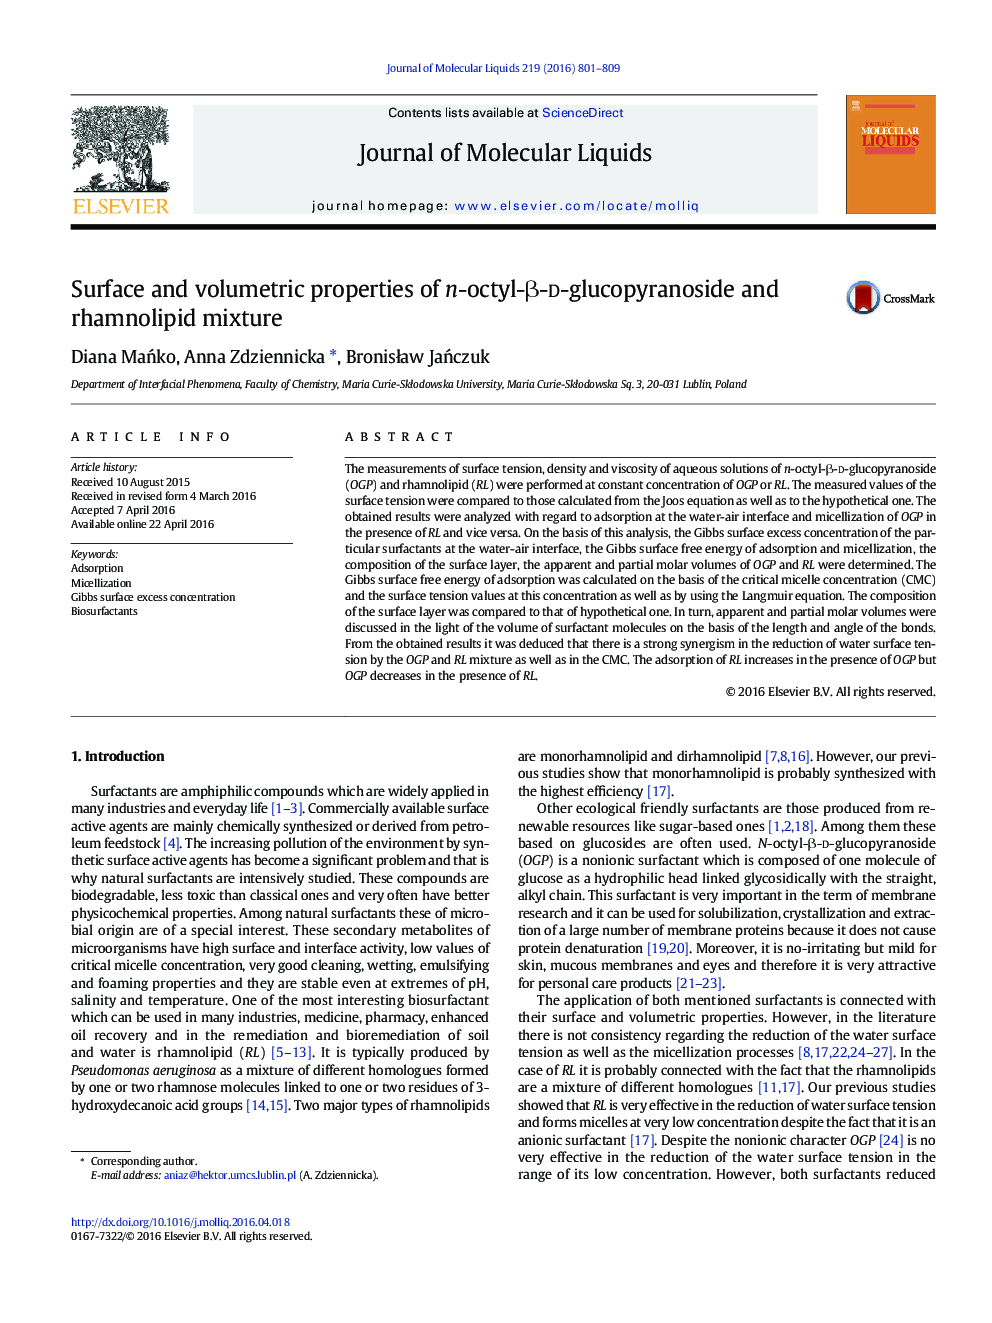 Surface and volumetric properties of n-octyl-Î²-d-glucopyranoside and rhamnolipid mixture